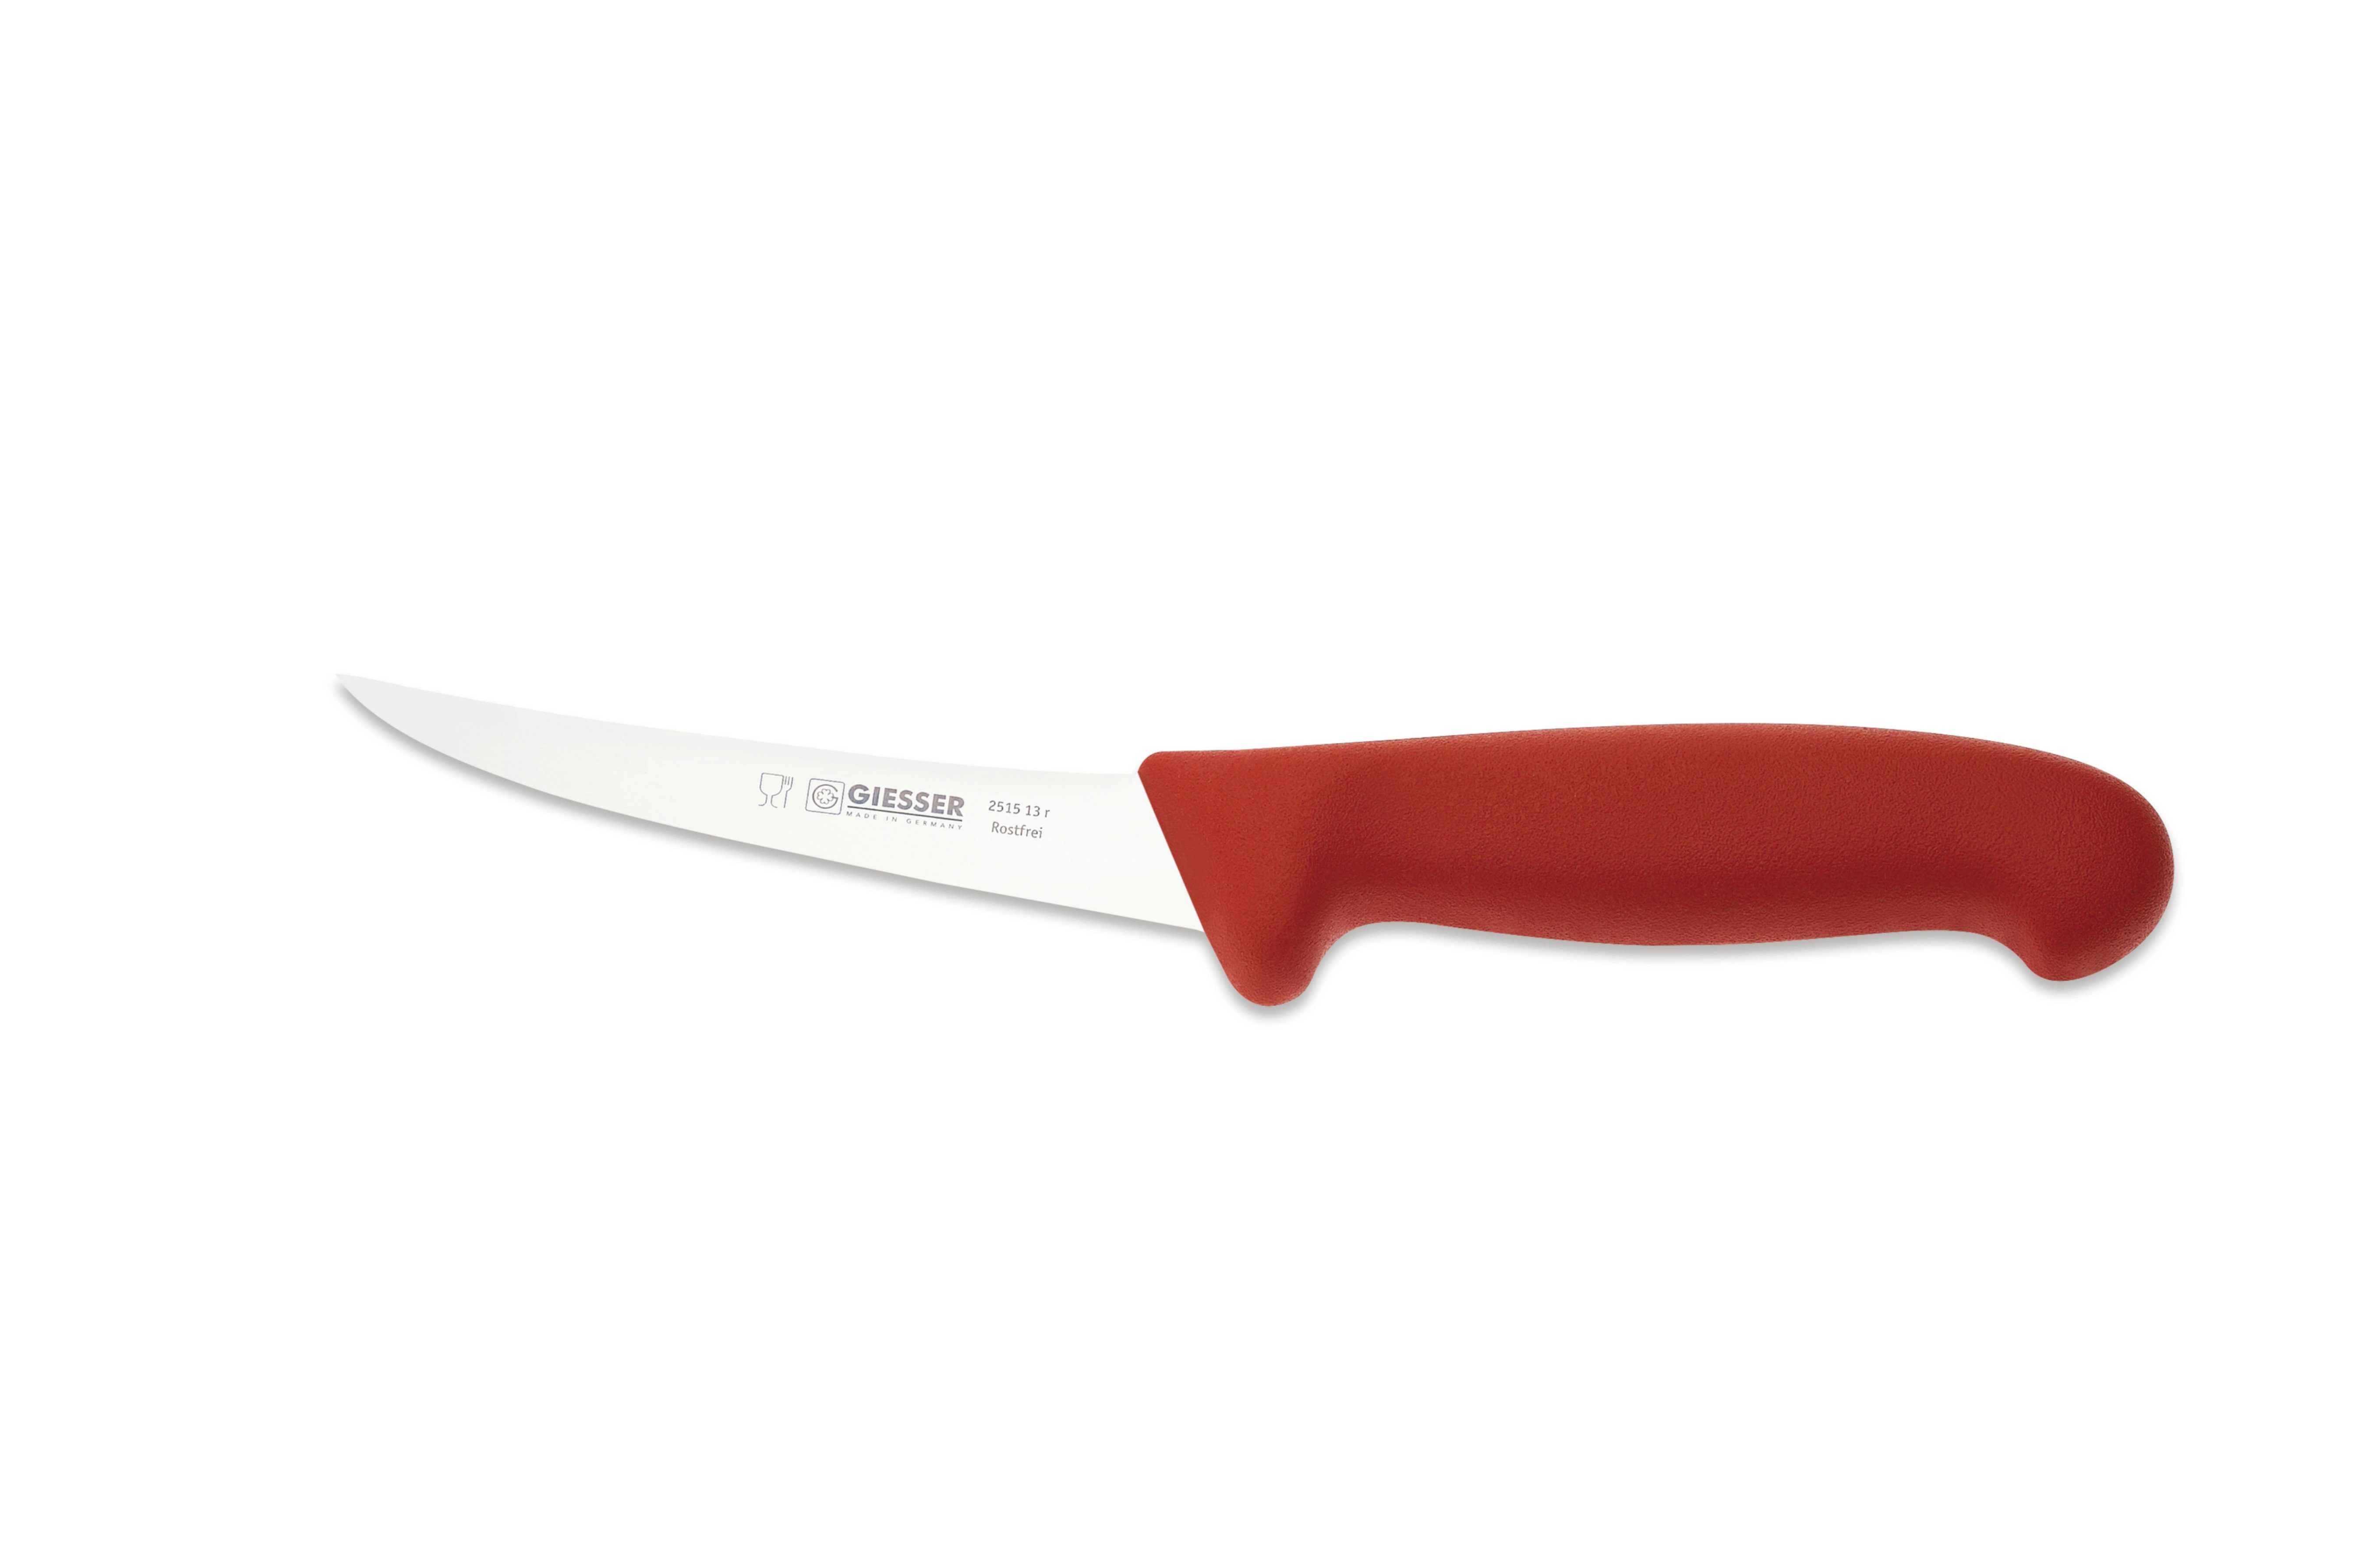 Giesser Messer Ausbeinmesser Fleischermesser 2505 sehr flexibel, flexibel, 13-17, Rot Klingenstärke: stark